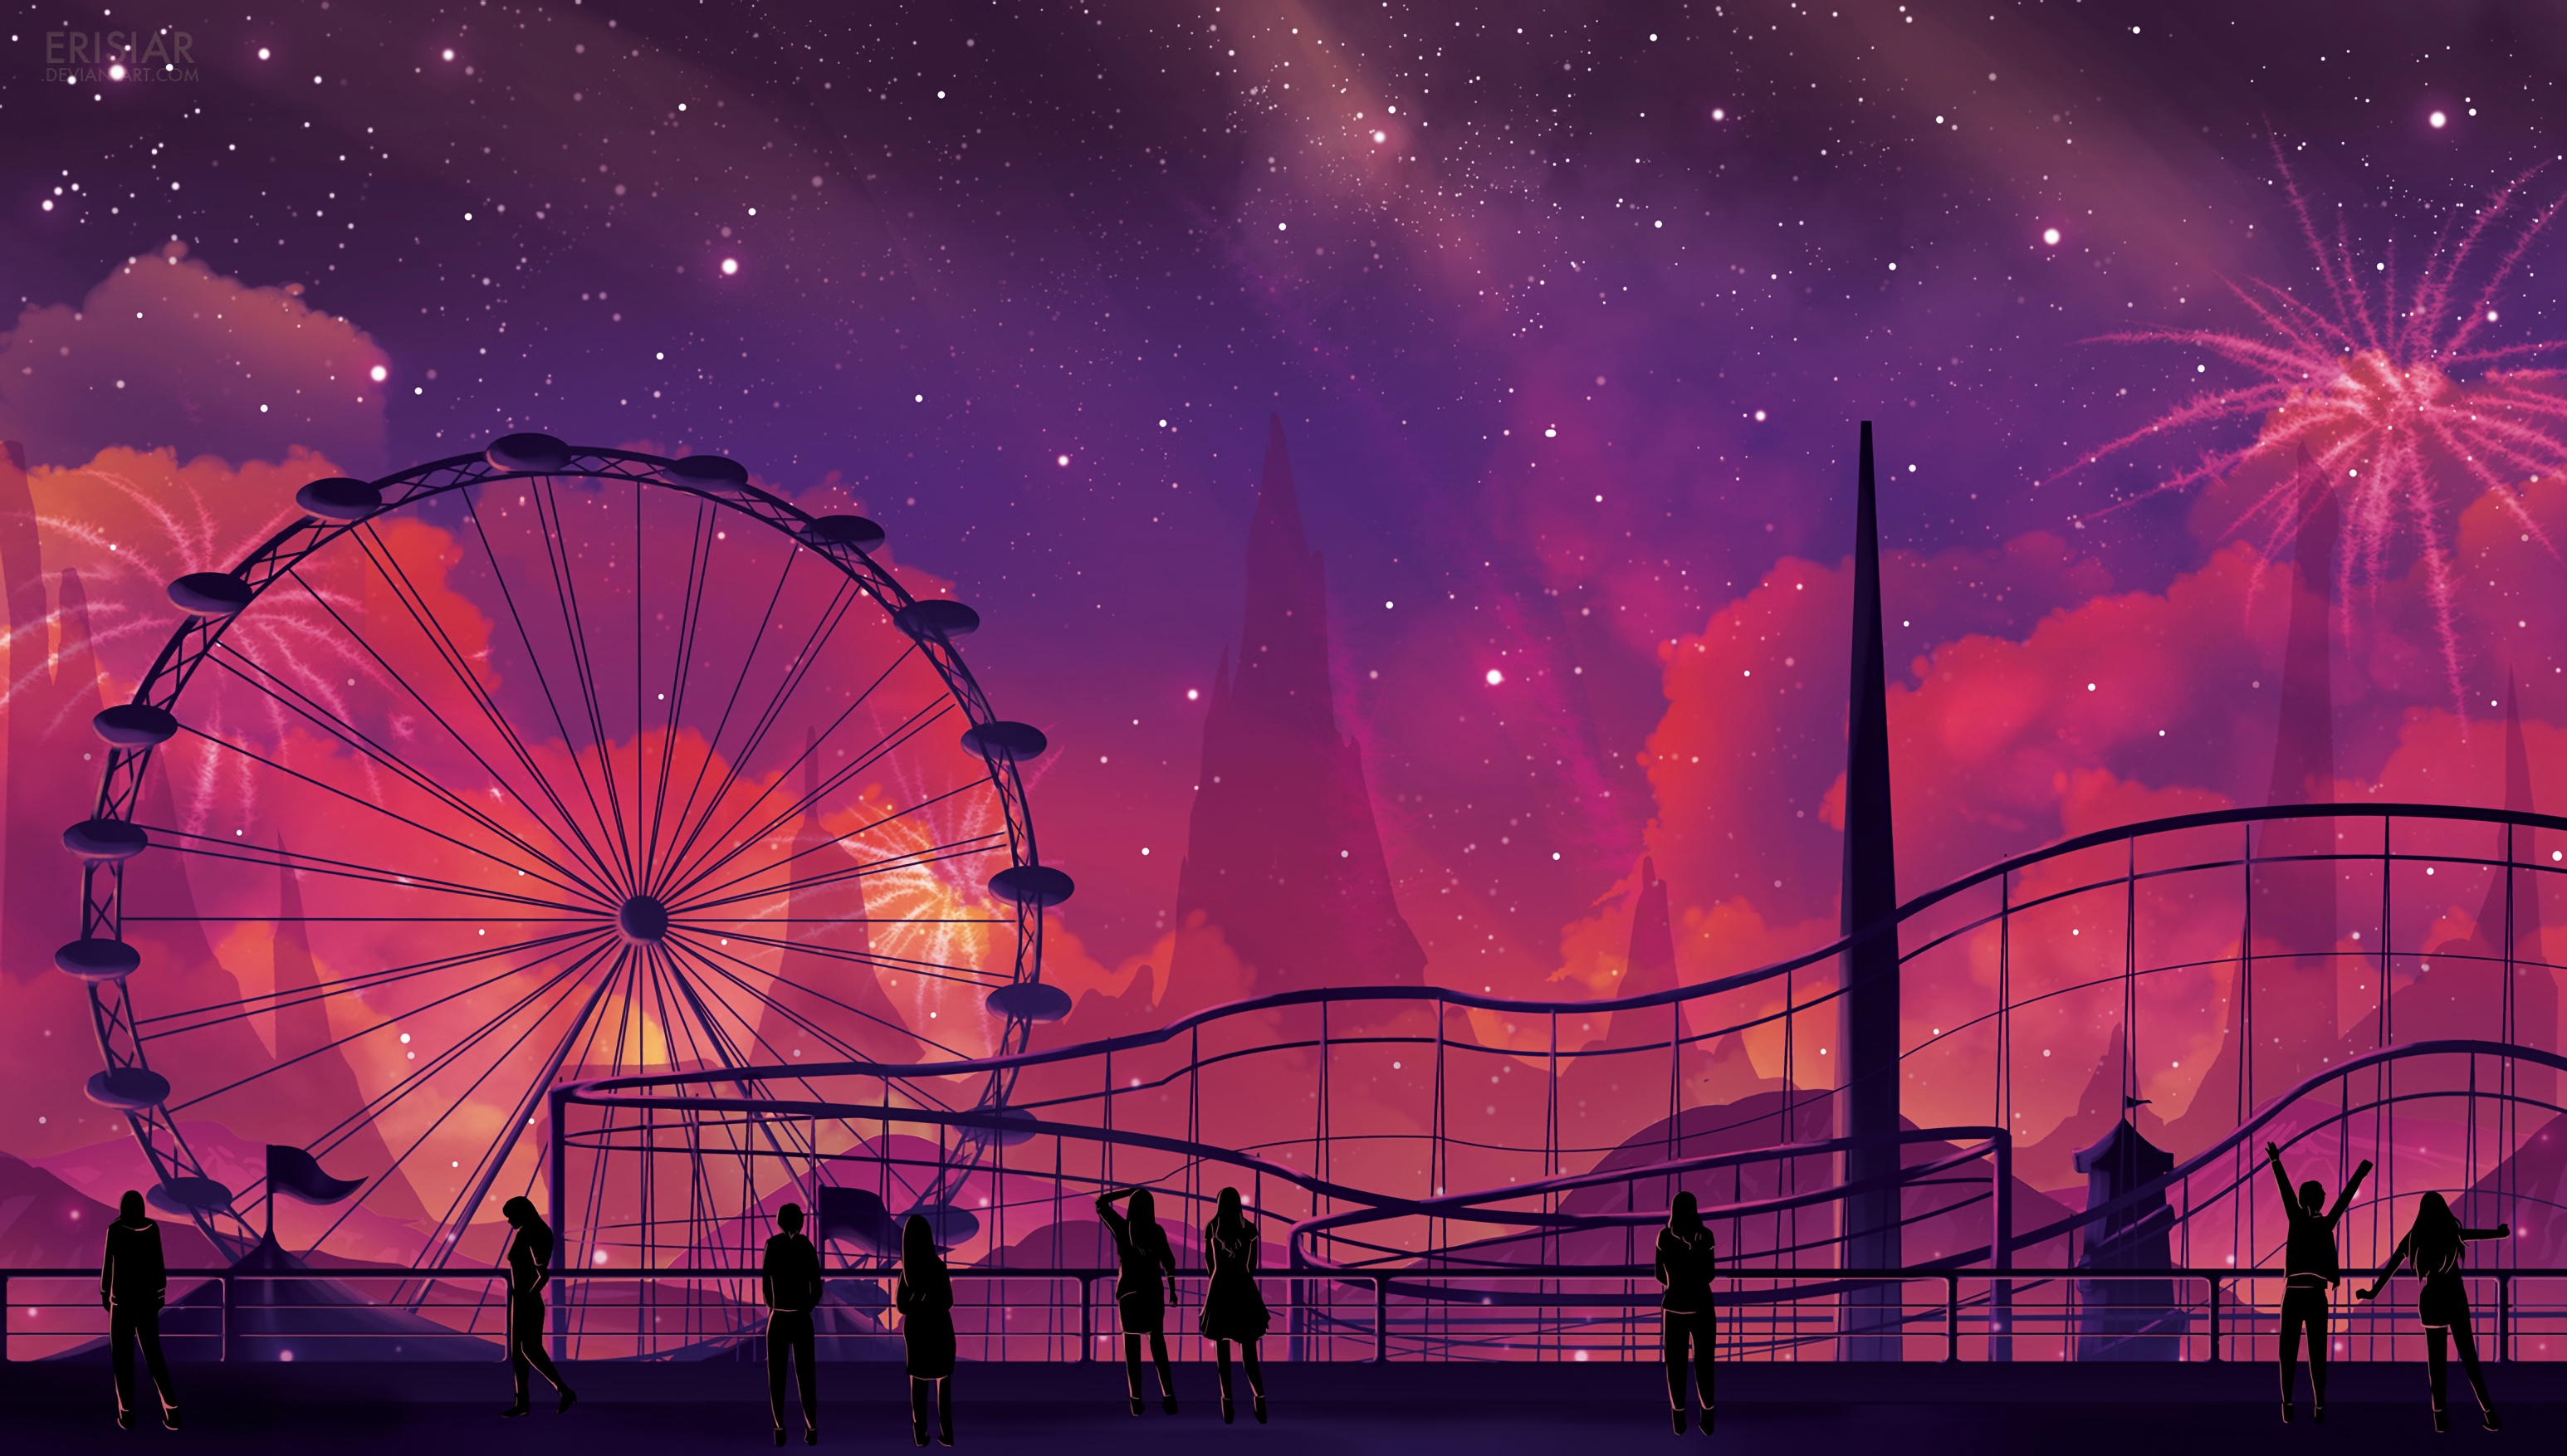 man made, amusement park, night, people, starry sky, amusement parks